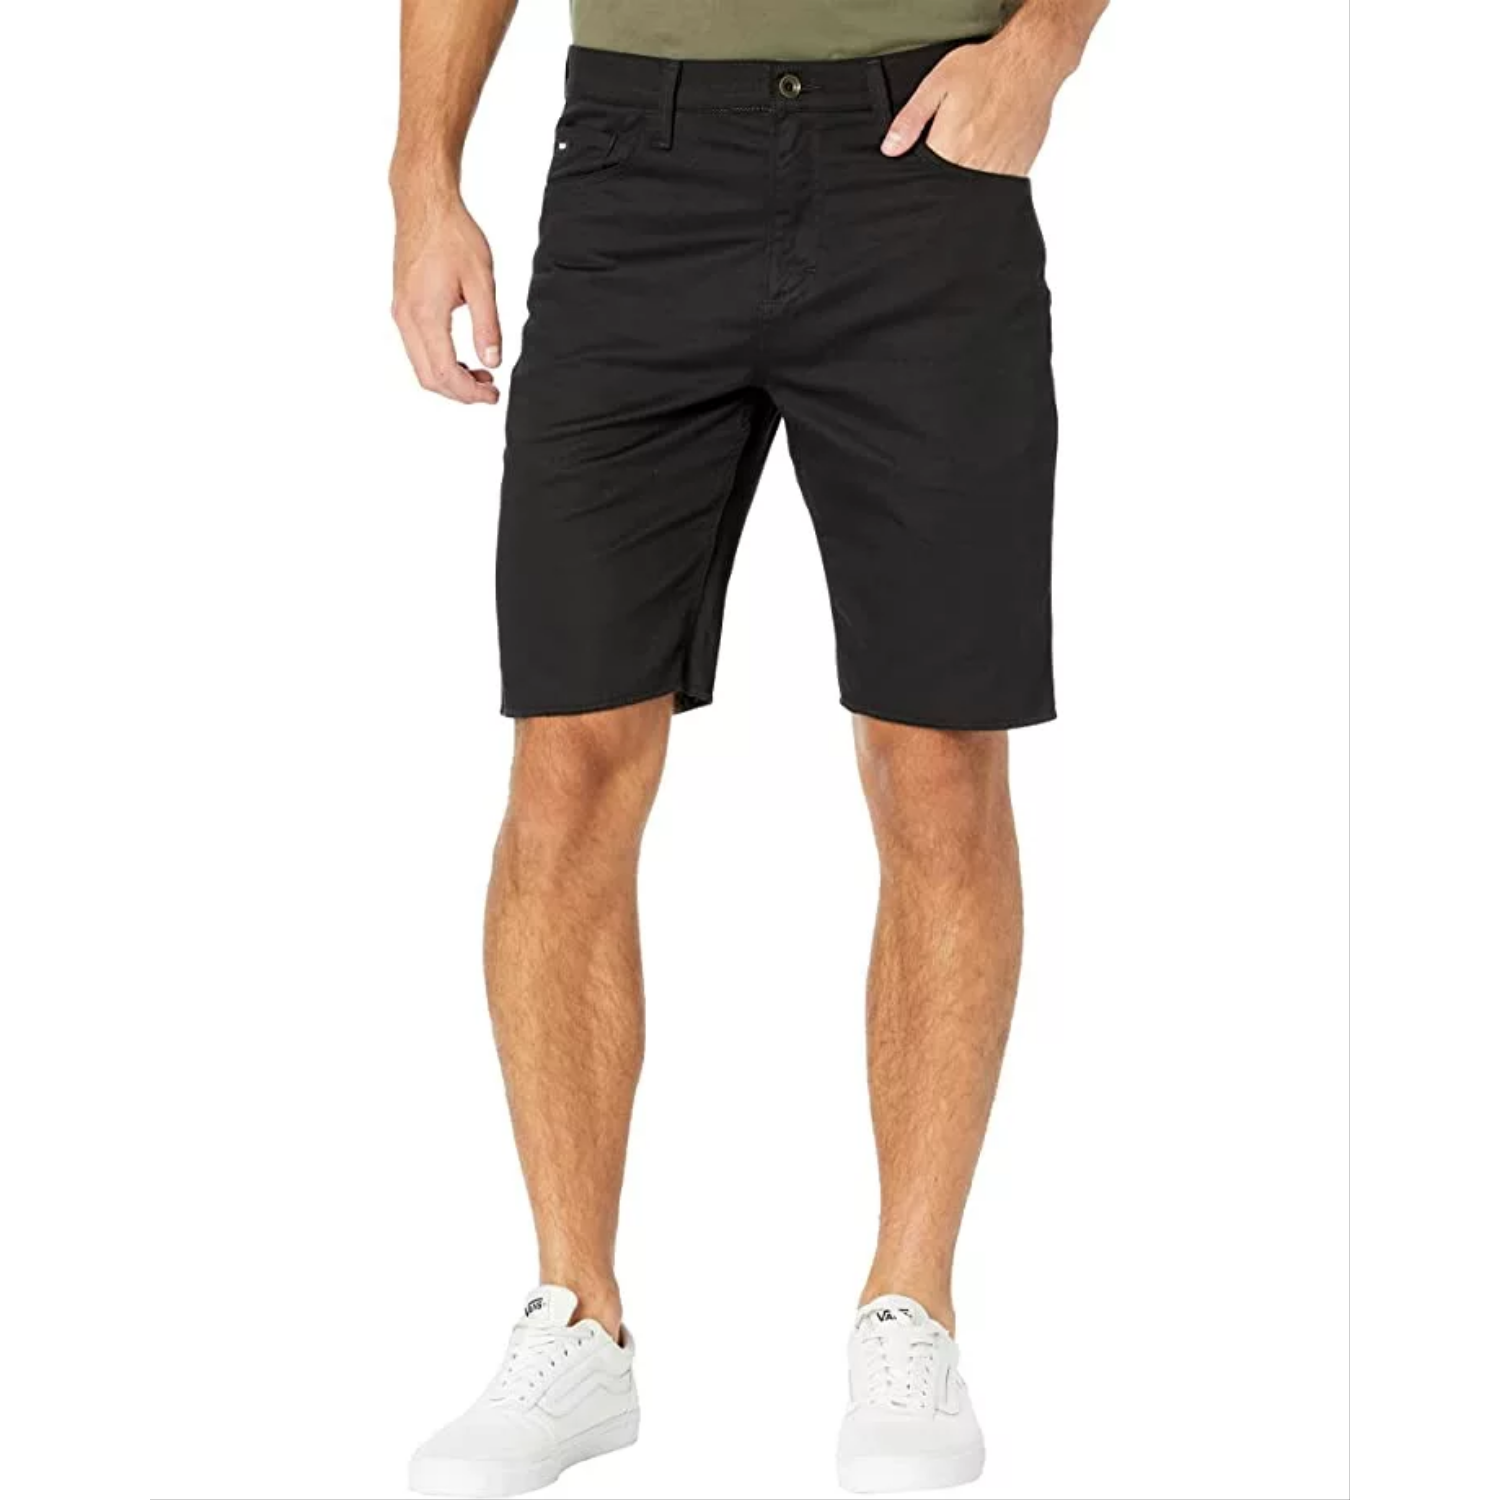 Shop Men\'s Shorts - Stylish & Comfortable - Great Deals!